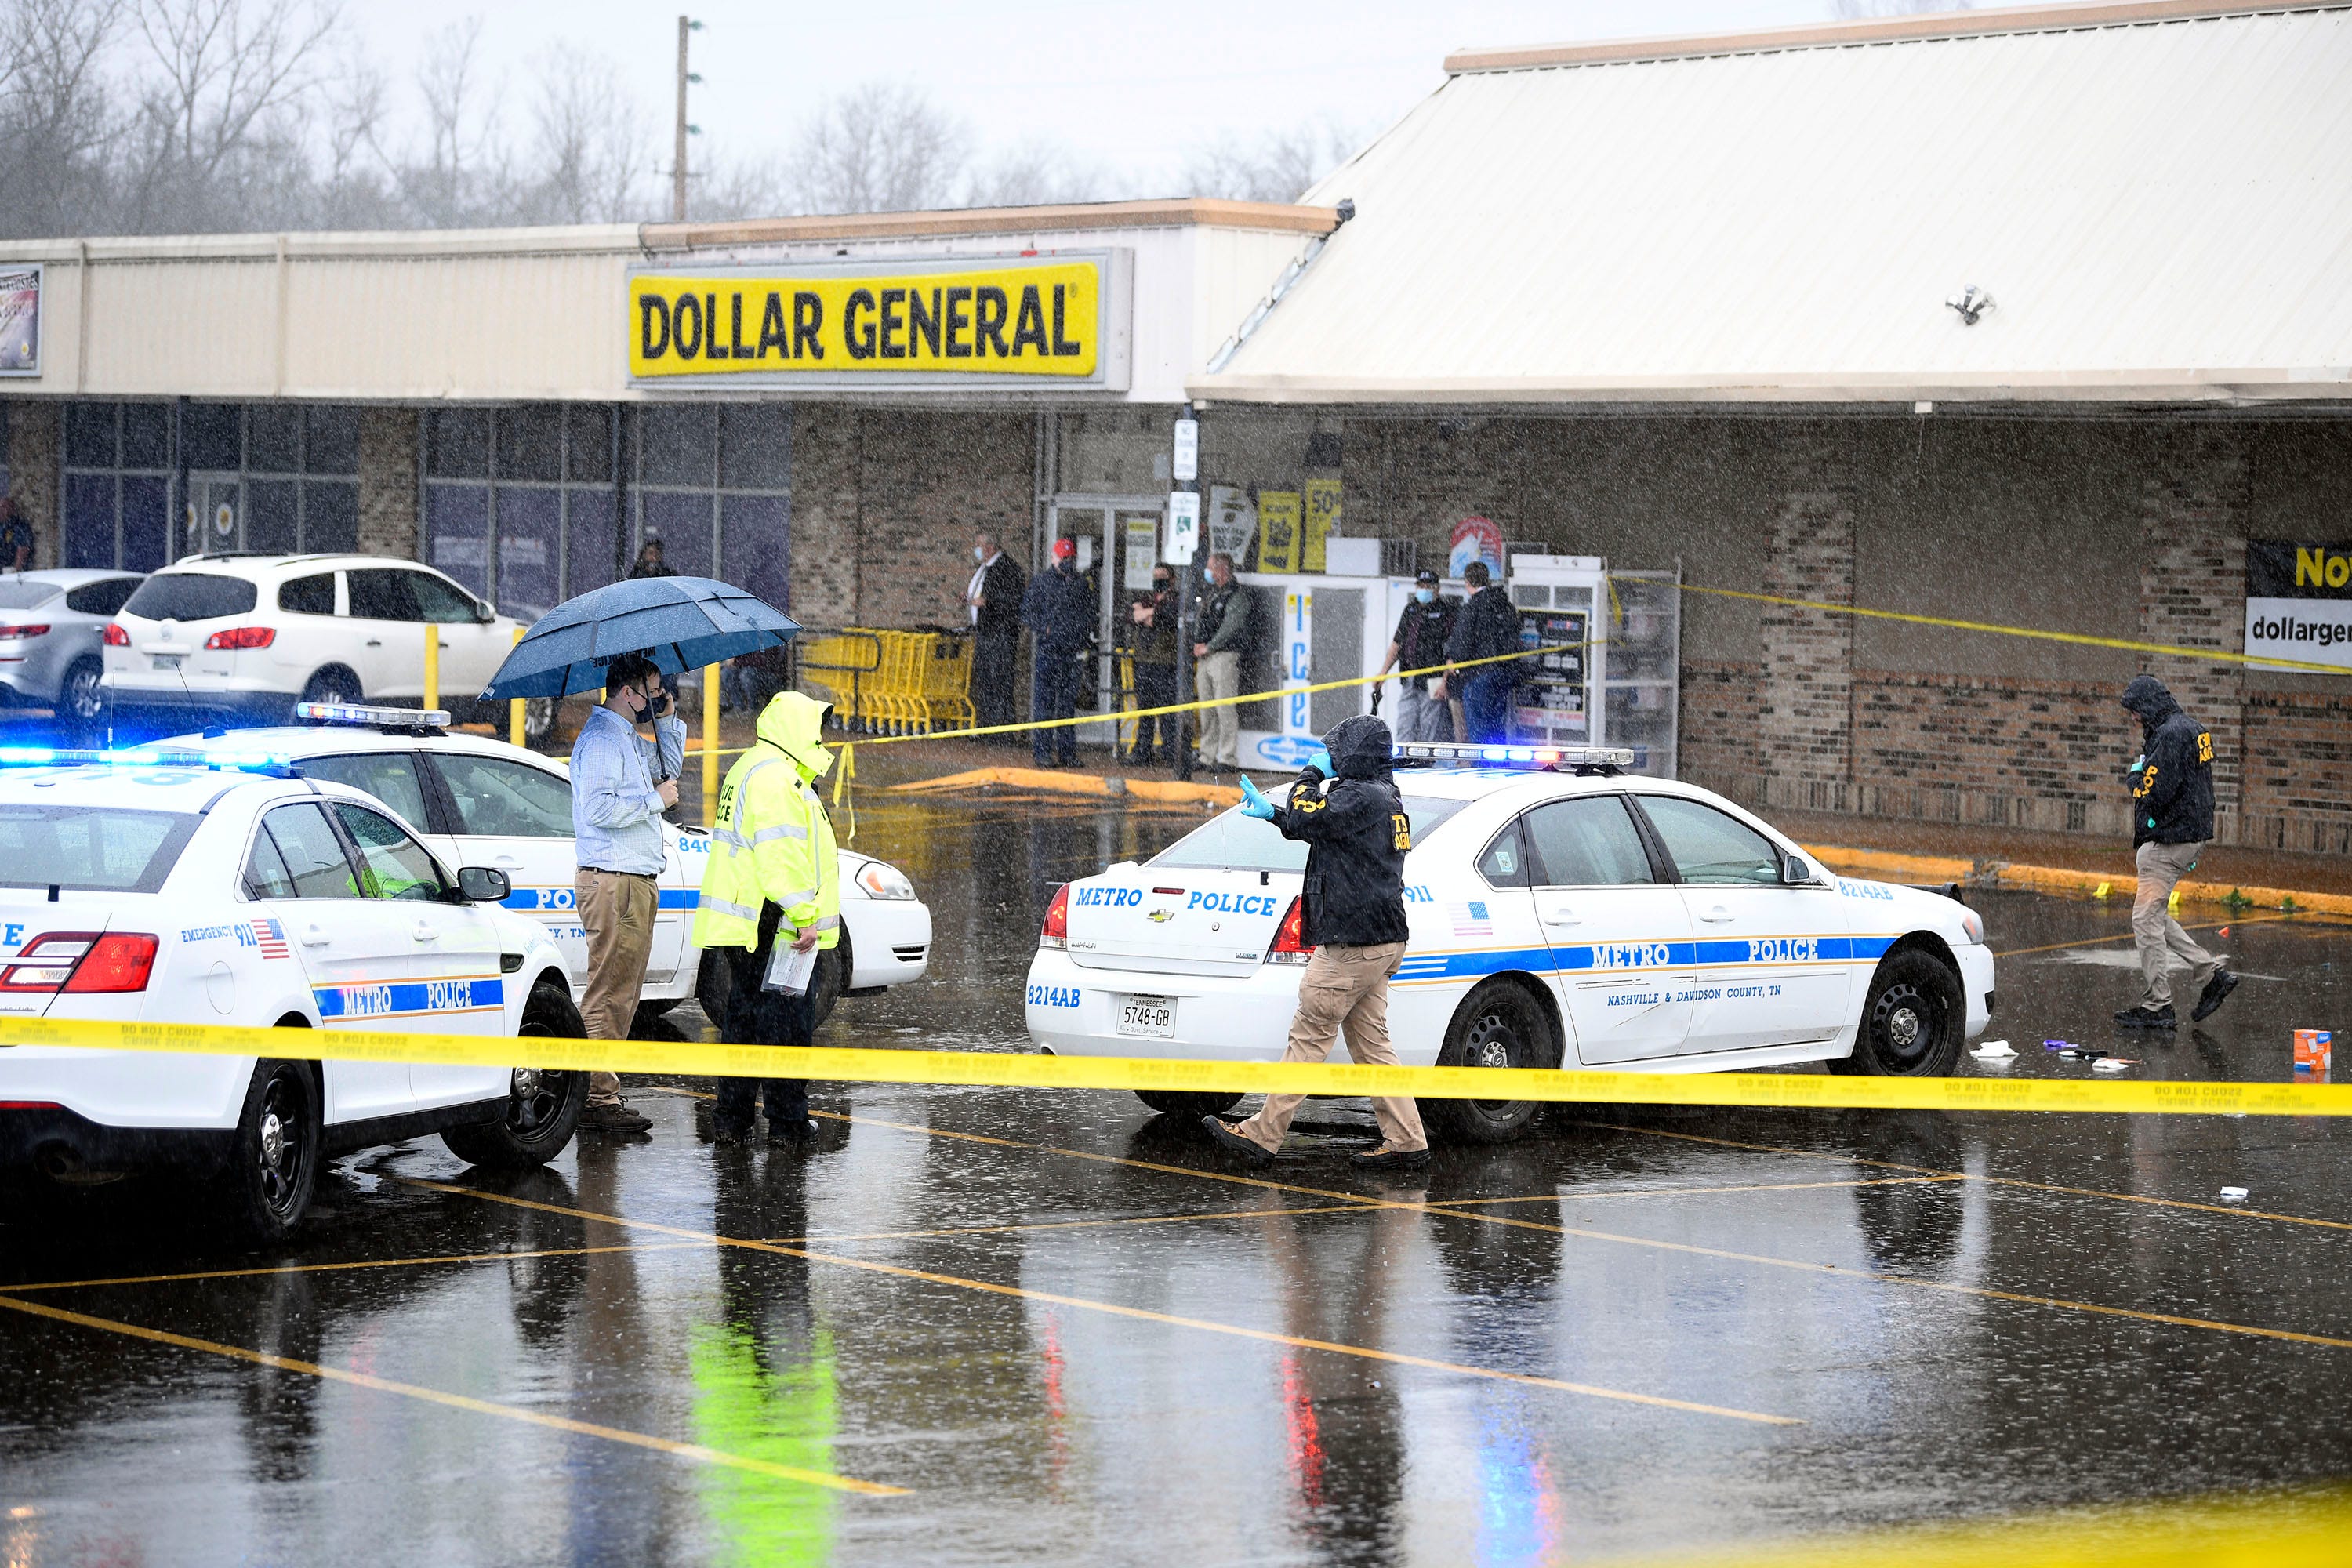 Nashville police camera shows shooting that kills woman, injures cop